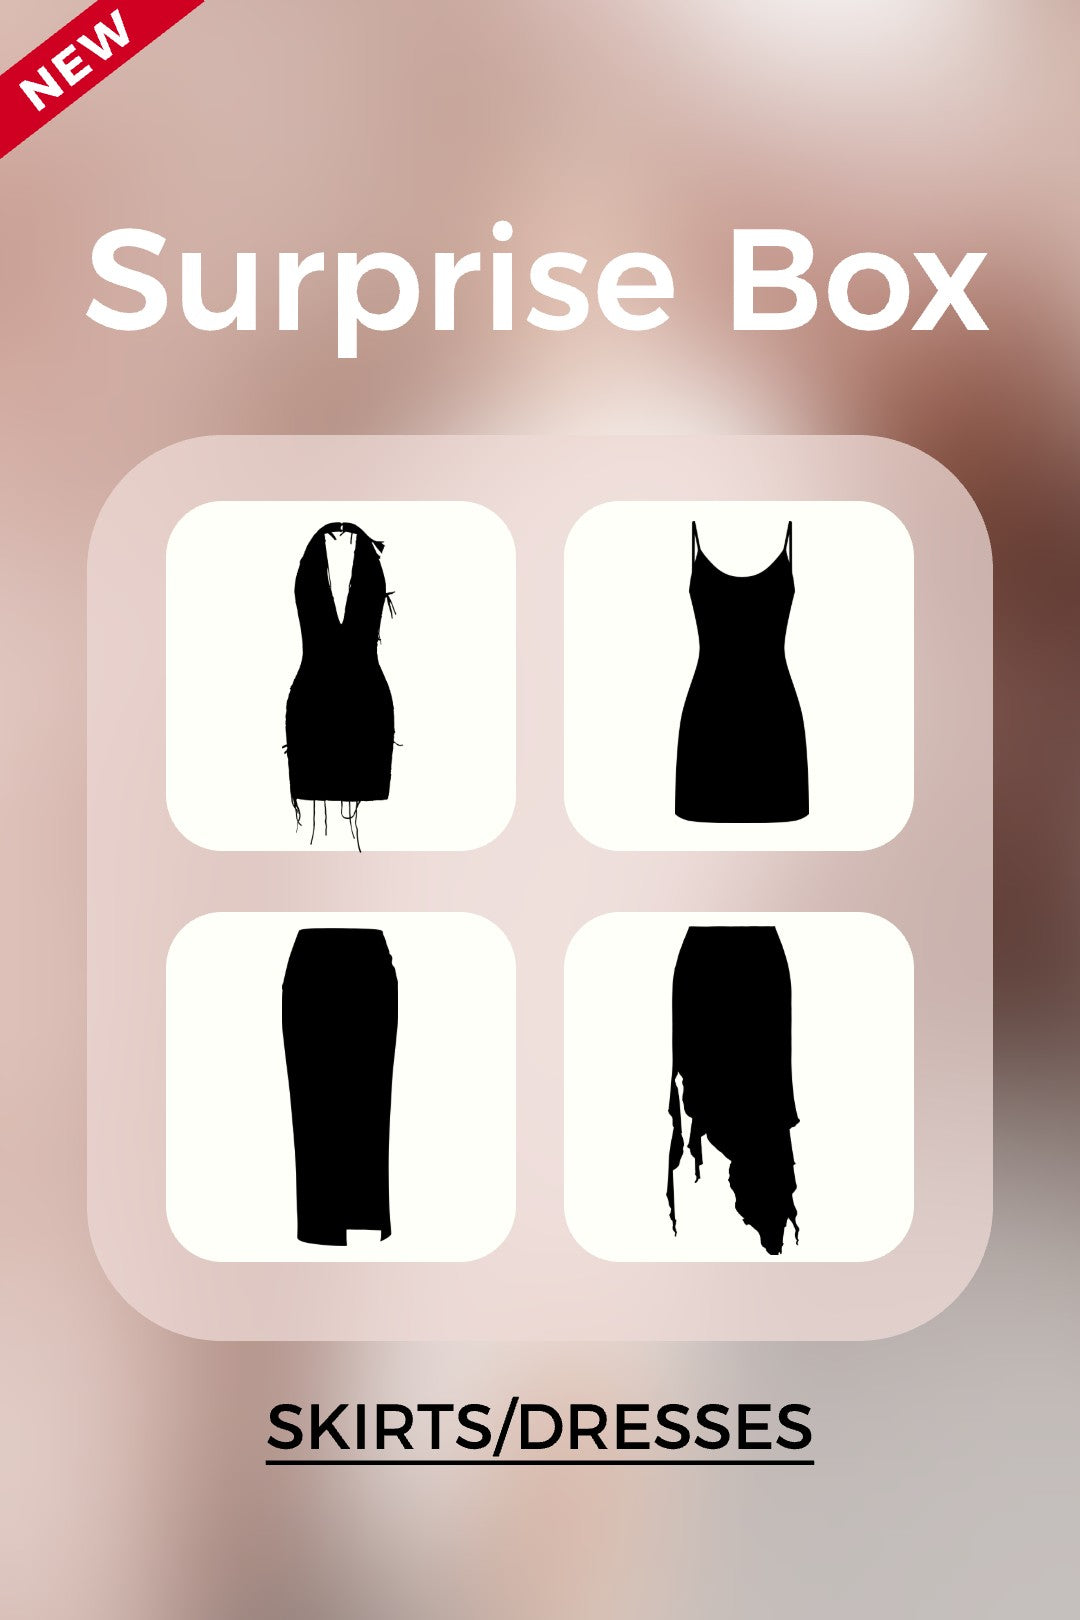 Surprise Box - Skirts/Dresses